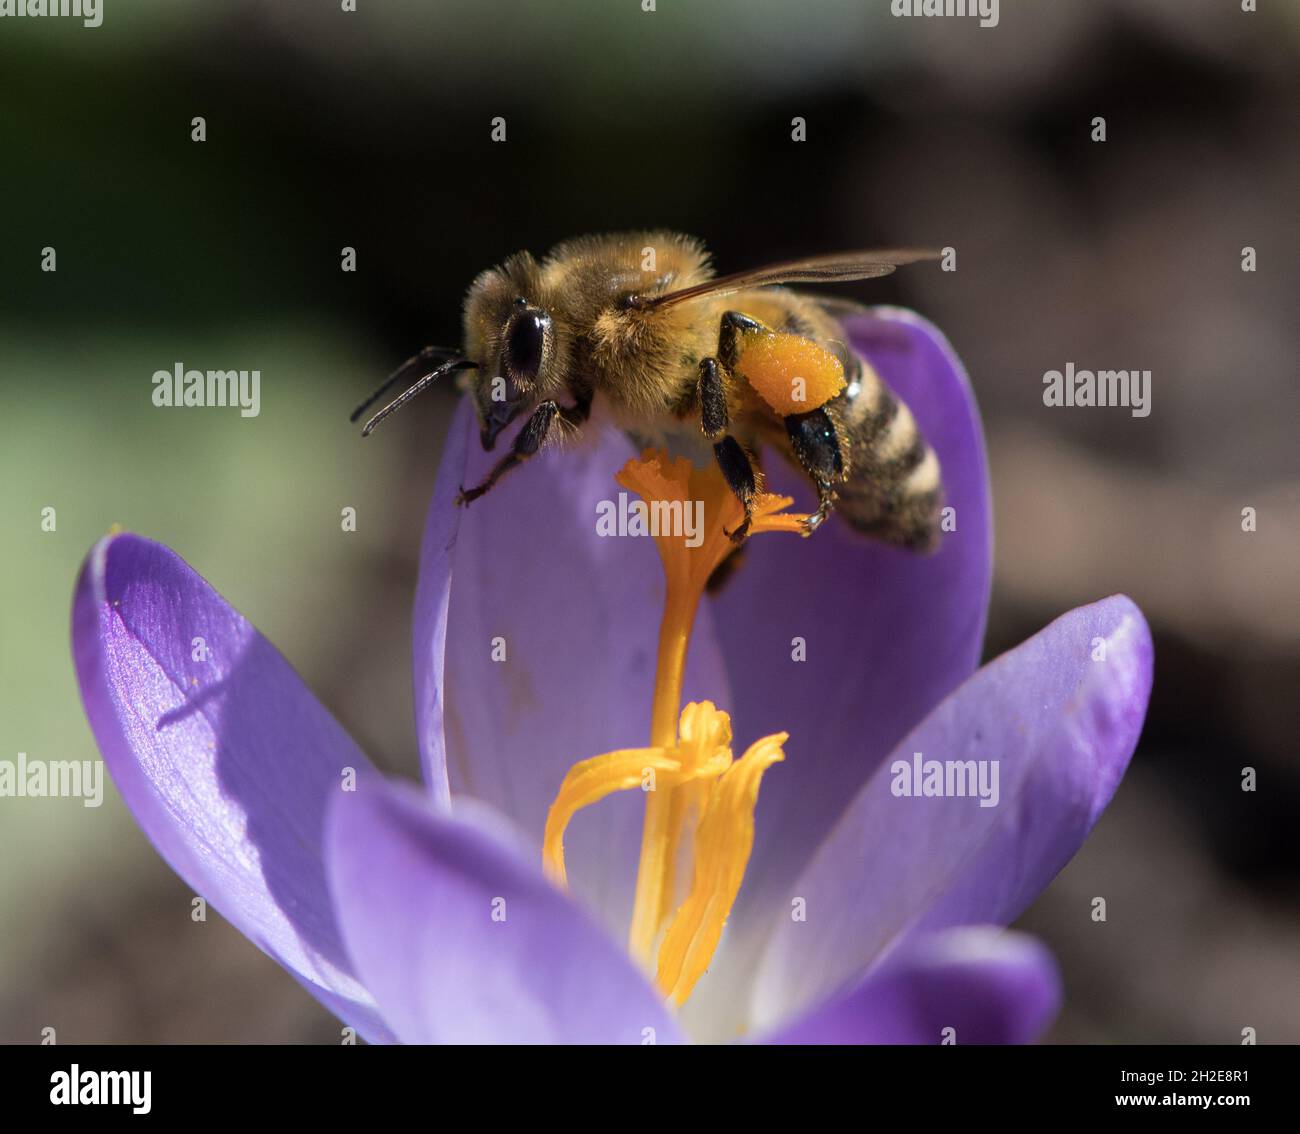 bee balancing on the stamen of a violet crocus blossom - macro shot Stock Photo